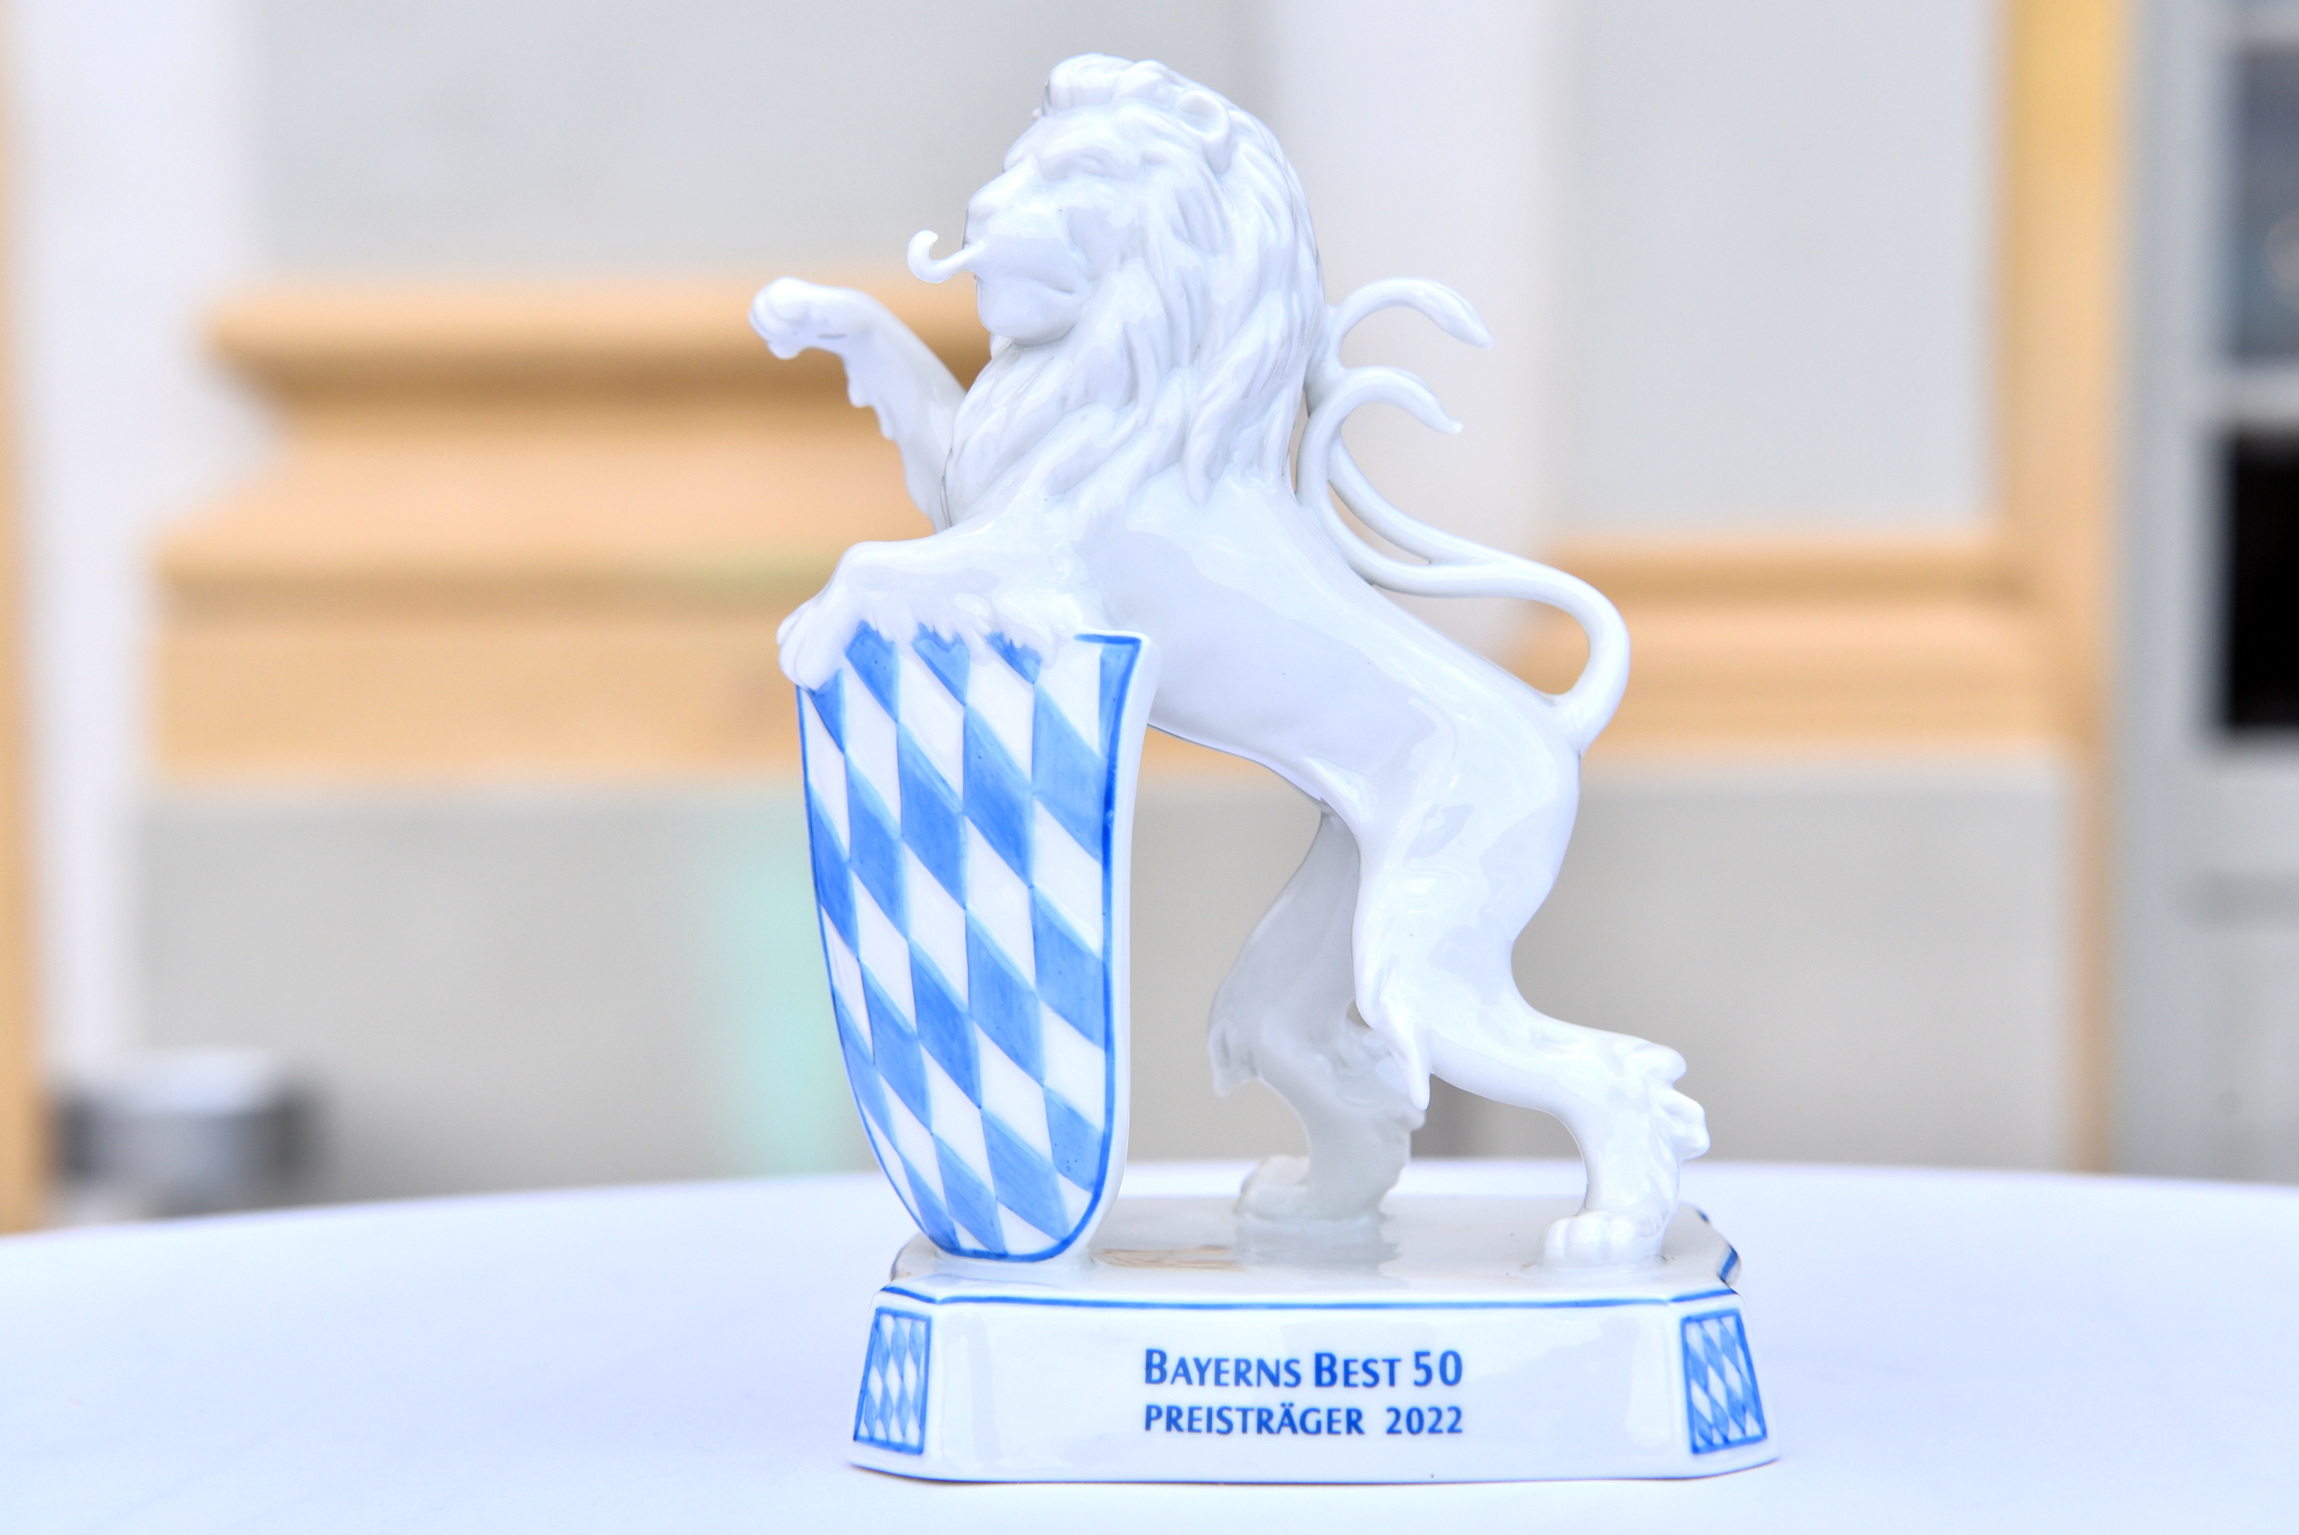 BayernsBest50 Award 2022